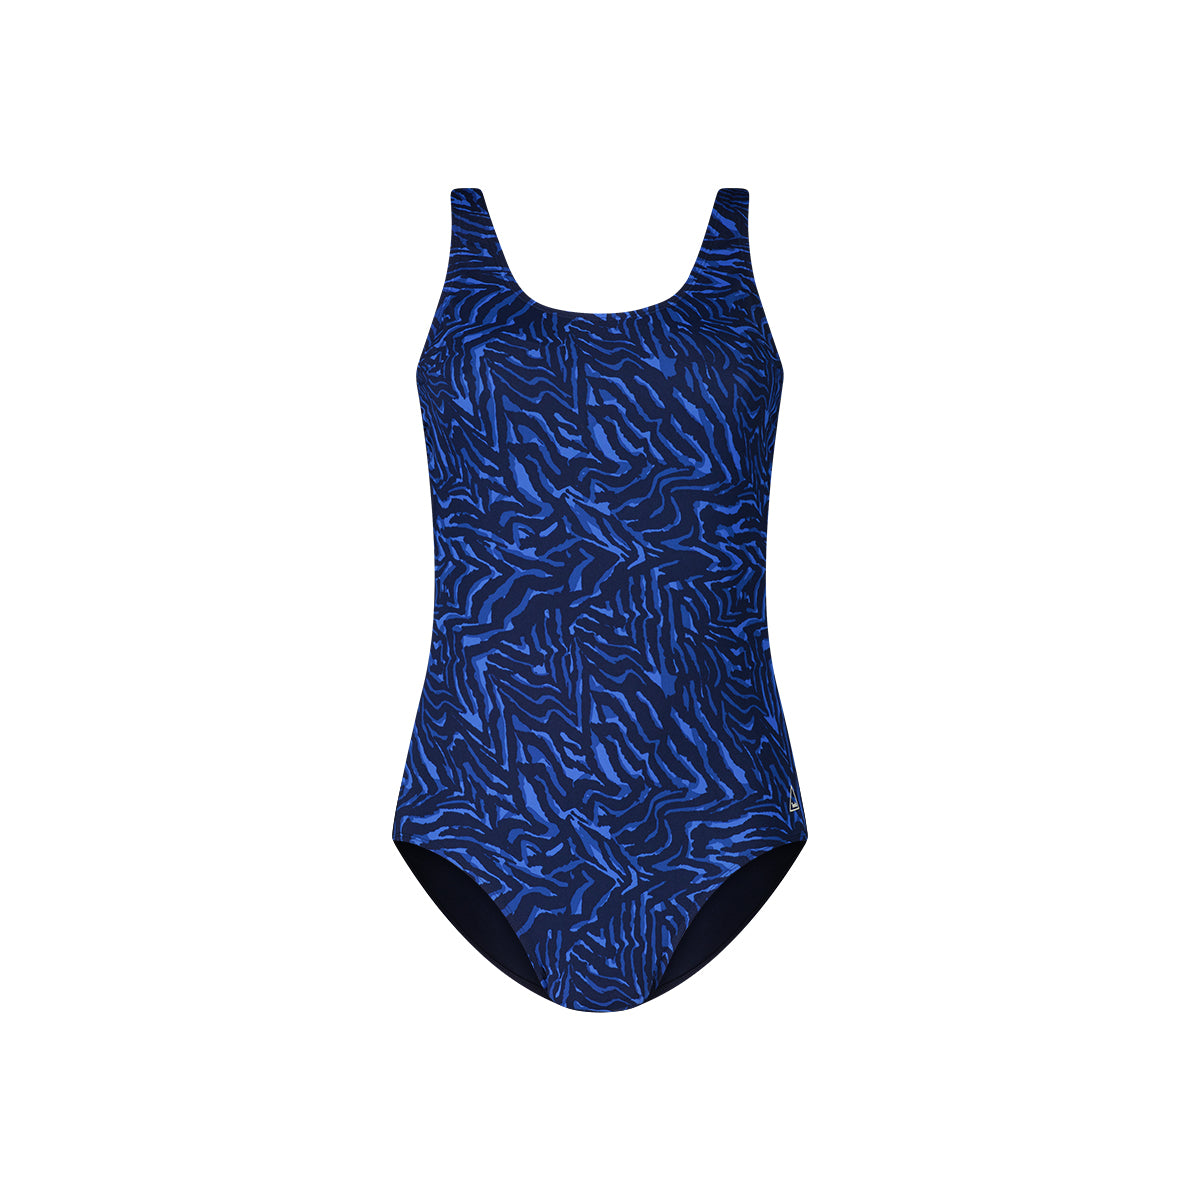 ten Cate Swim (Tweka) shape badpak soft cup - 10976 - Animal spots blue